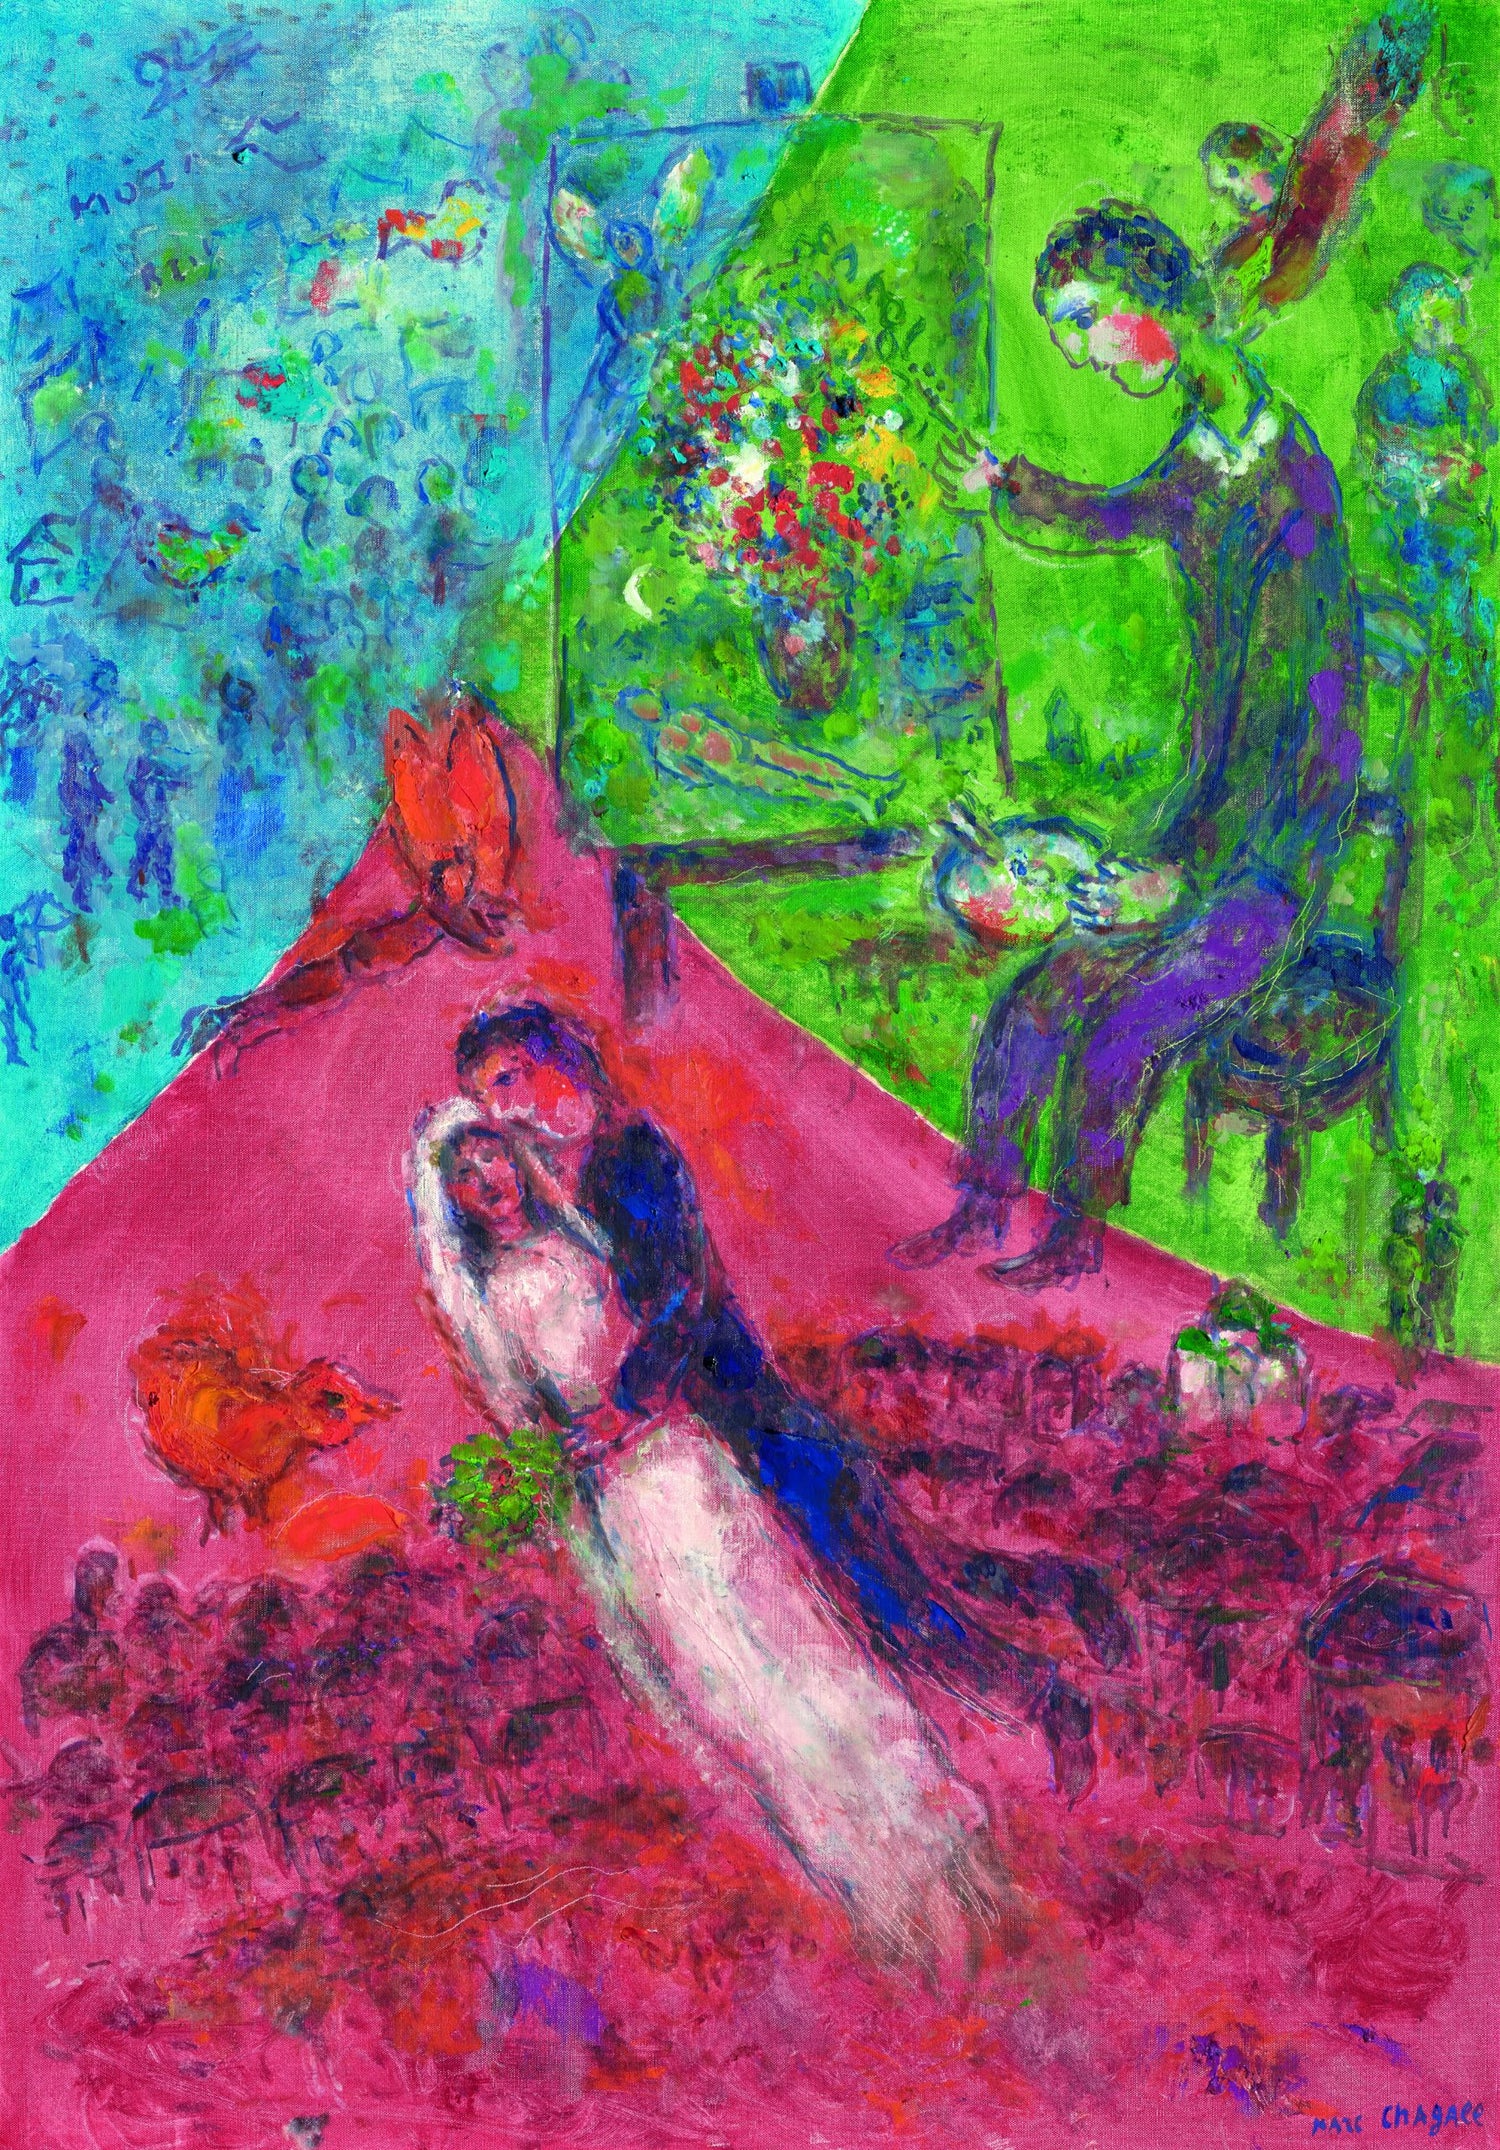 Chagall's Whimsical World